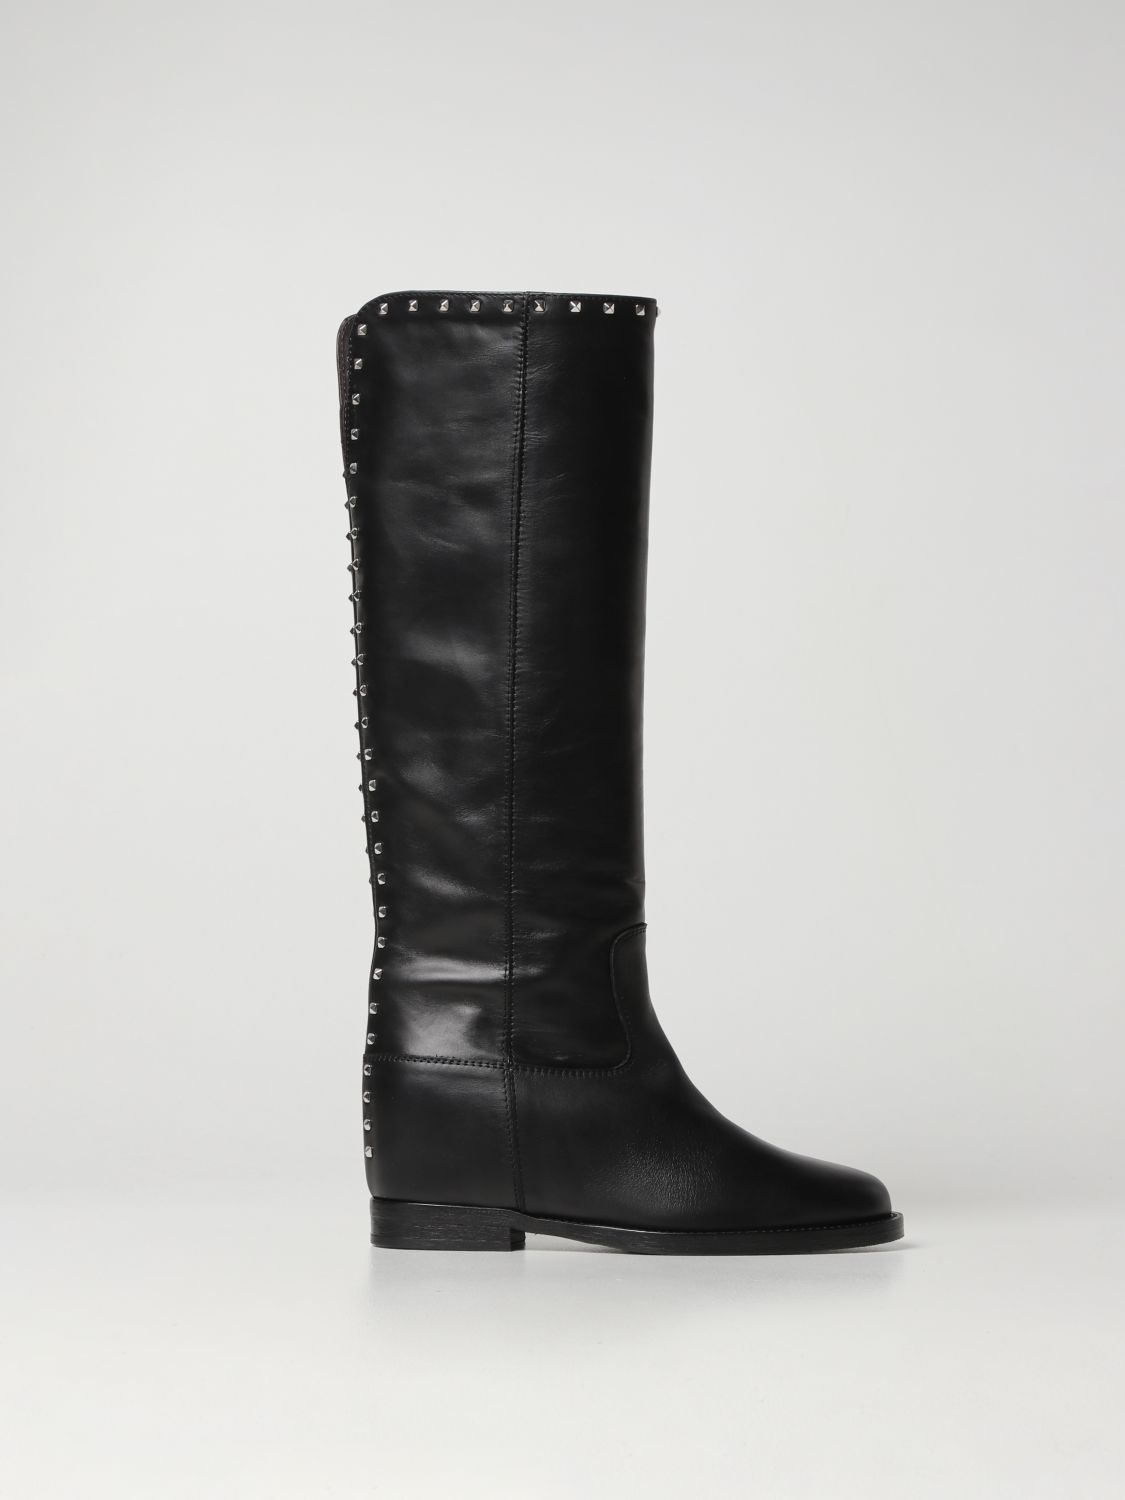 Bedrijf ernstig Slovenië VIA ROMA 15: boots for woman - Black | Via Roma 15 boots 3157 online on  GIGLIO.COM